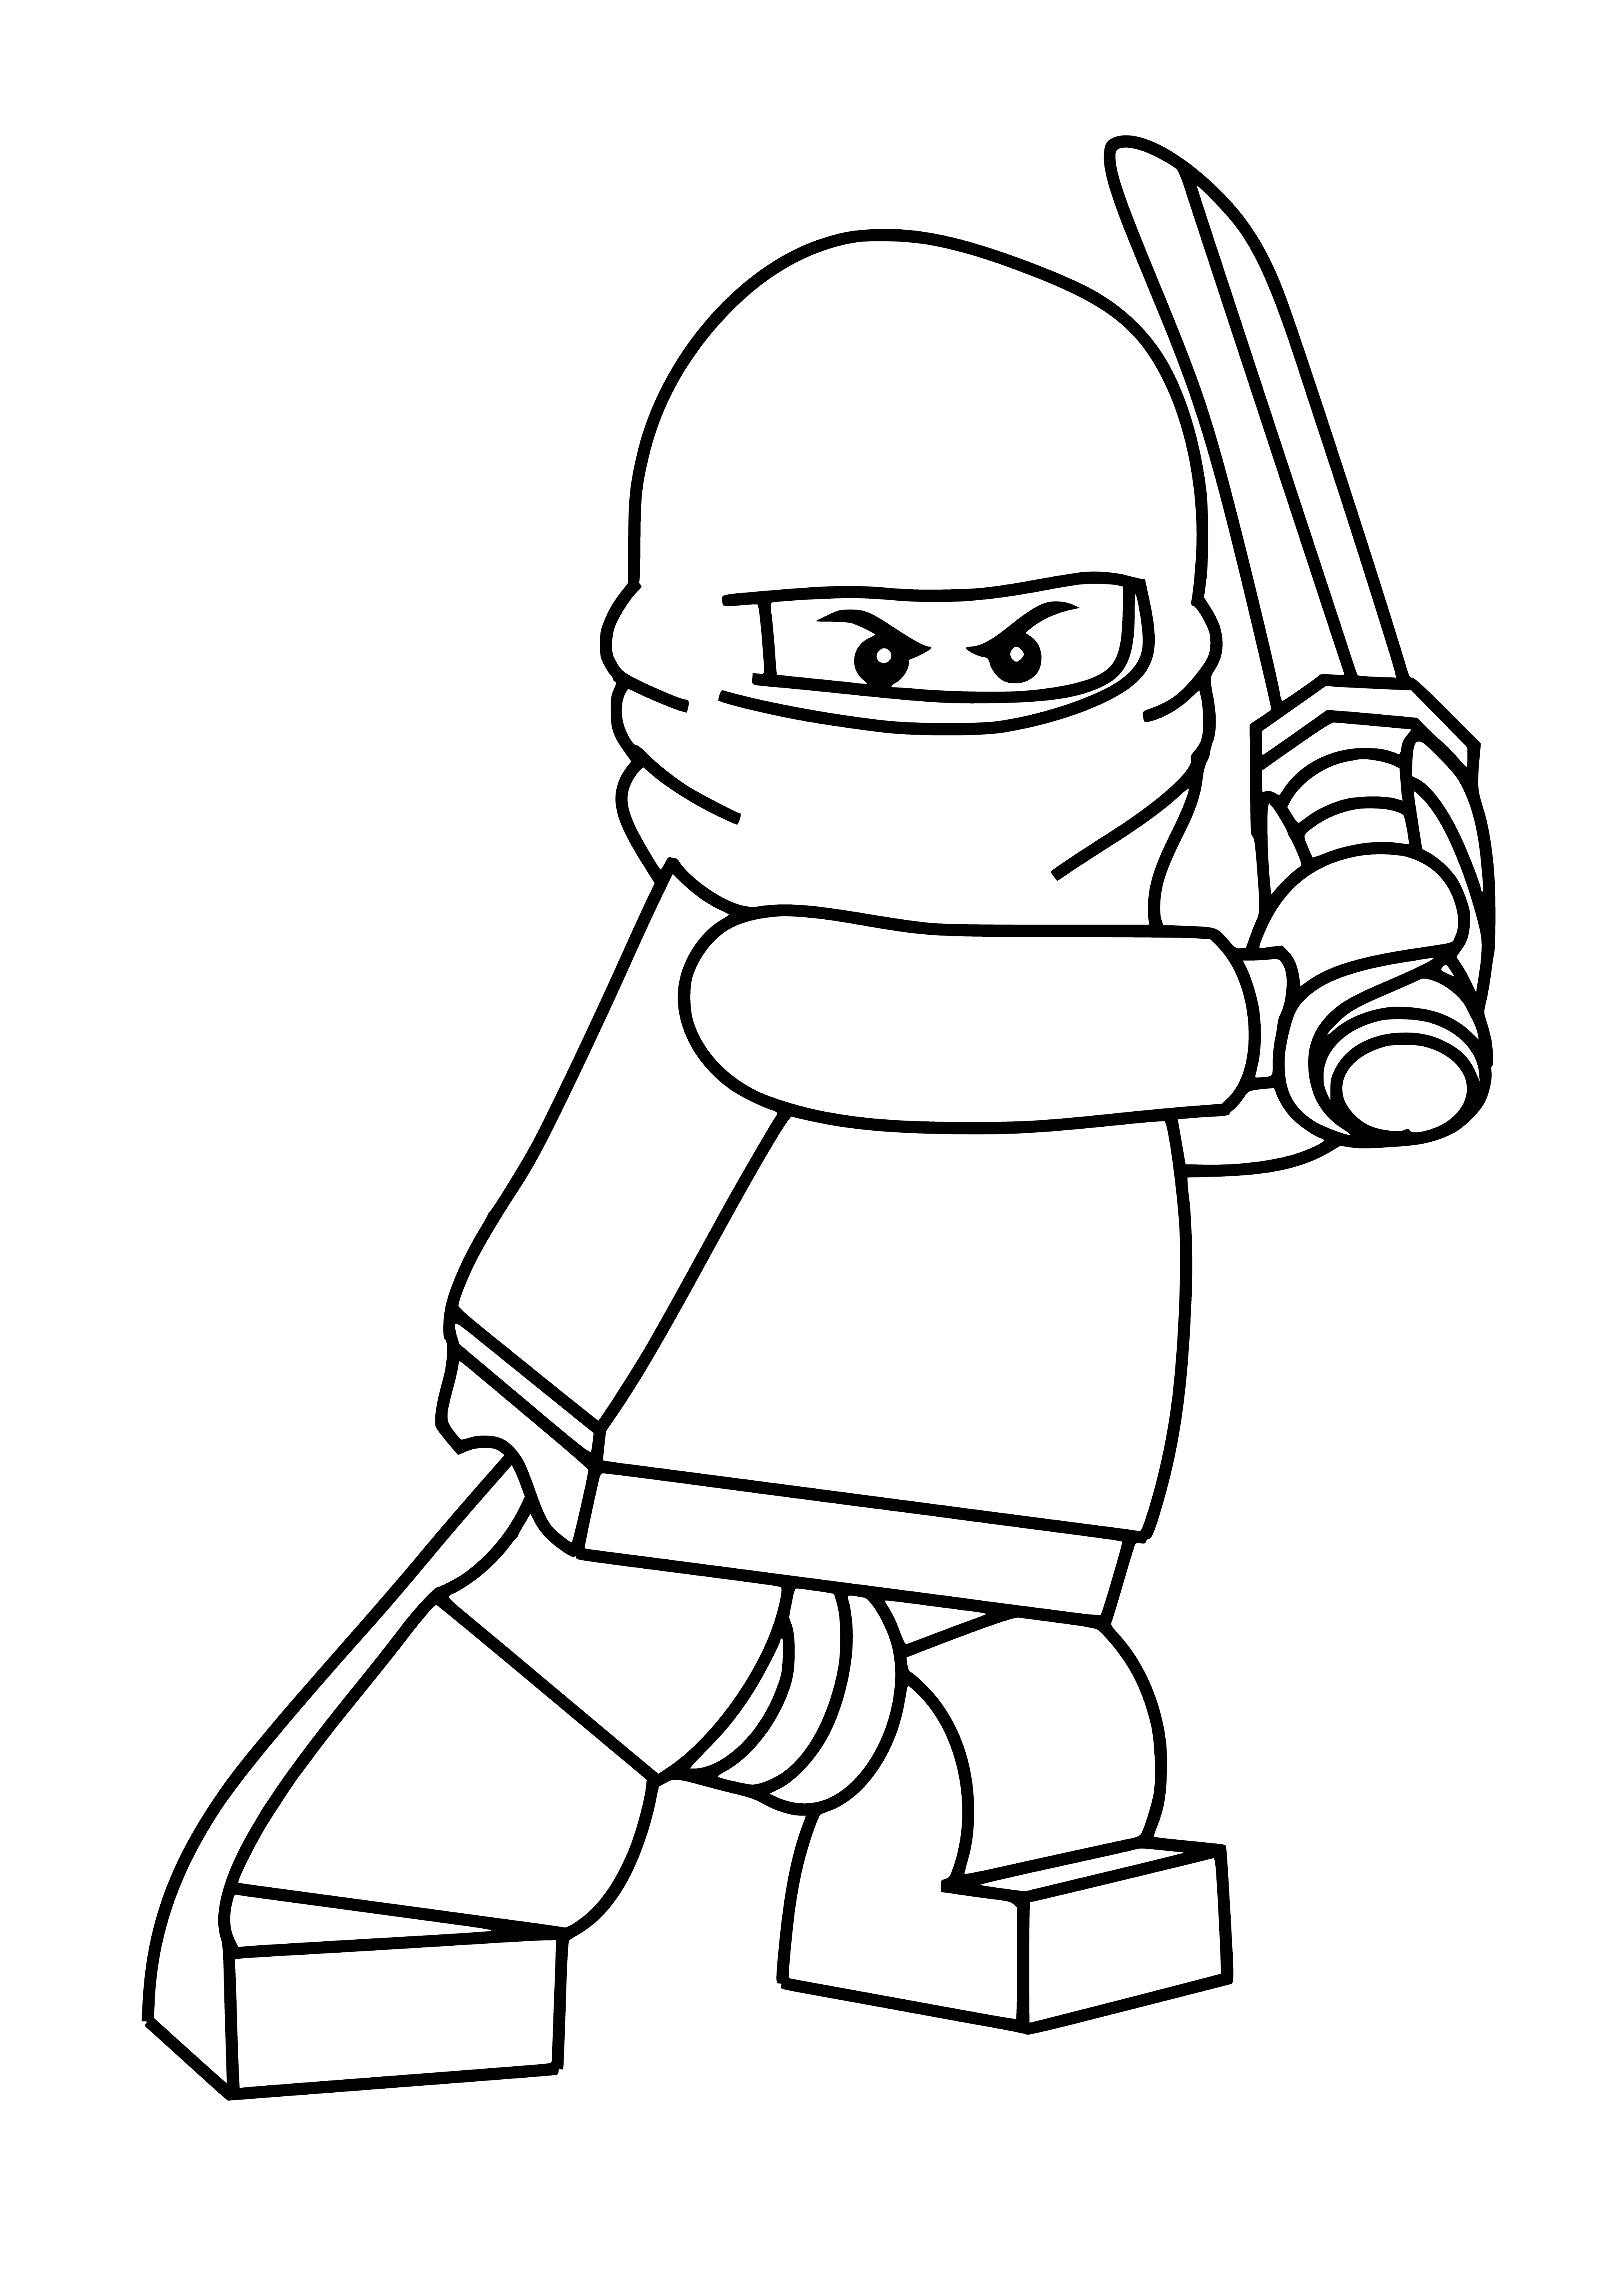 coloring page: LEGO ninja figurine with sword & katana, all-black samarai-inspired look, ready for battle.